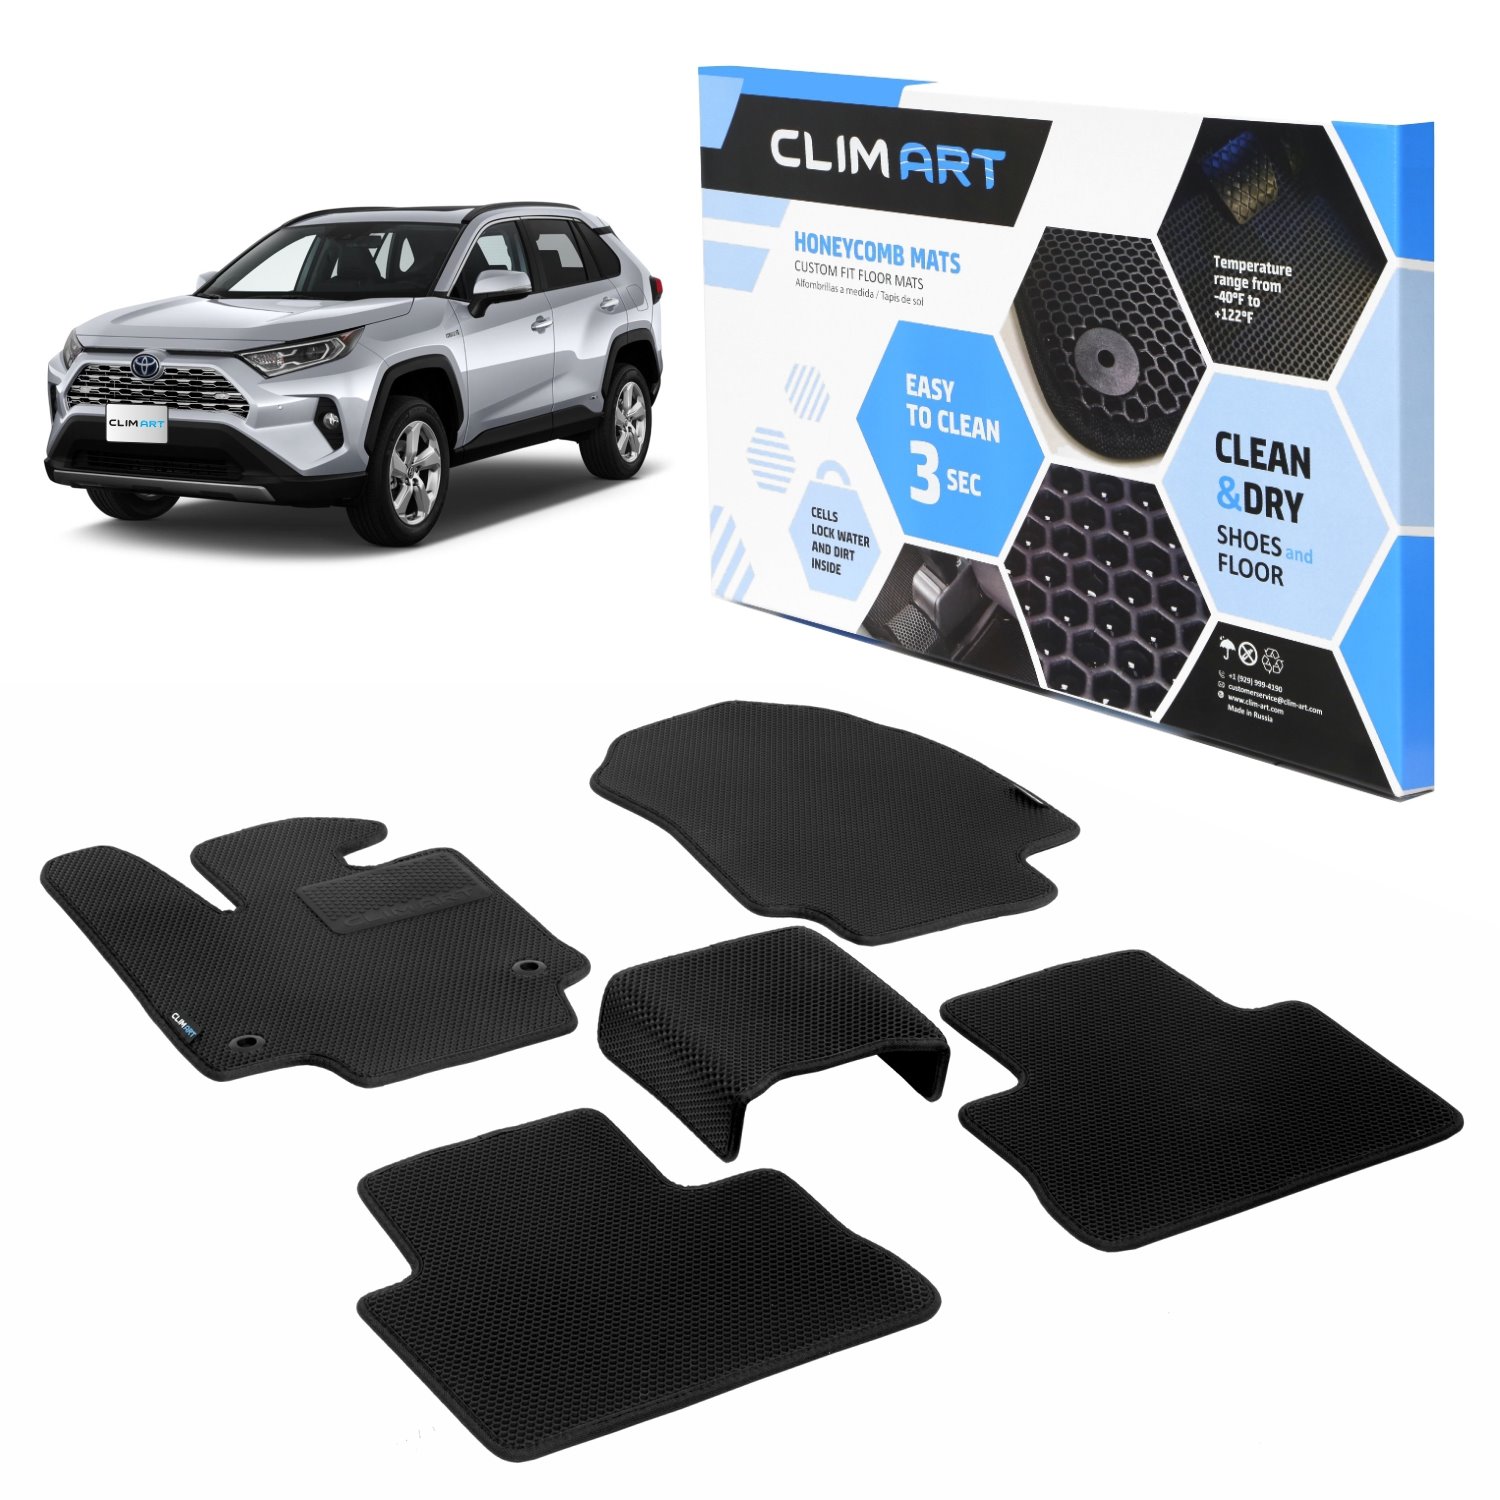 CLIM ART Honeycomb Custom Fit Floor Mats Fits Select Toyota RAV4